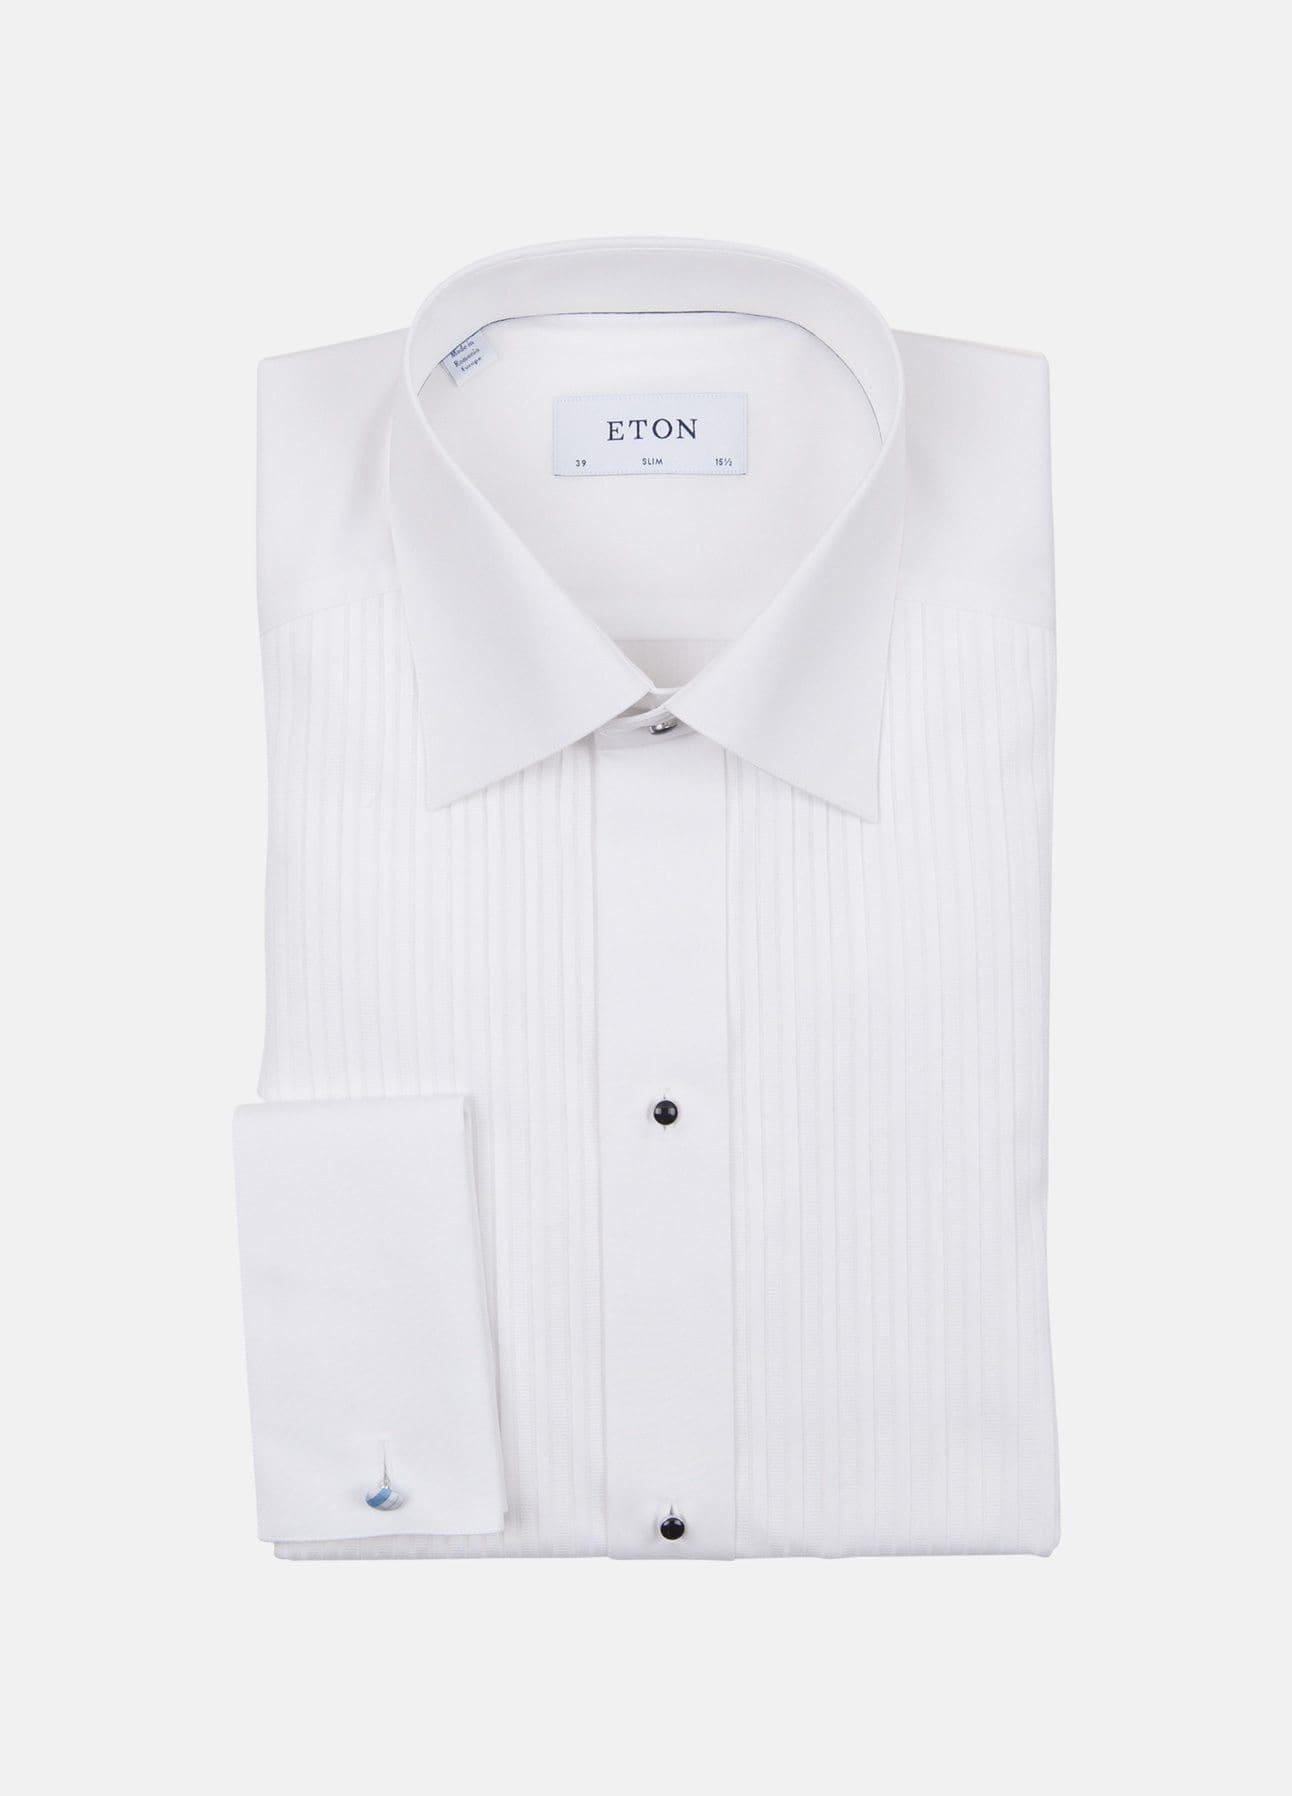 Hvid smokingskjorte fra Eton